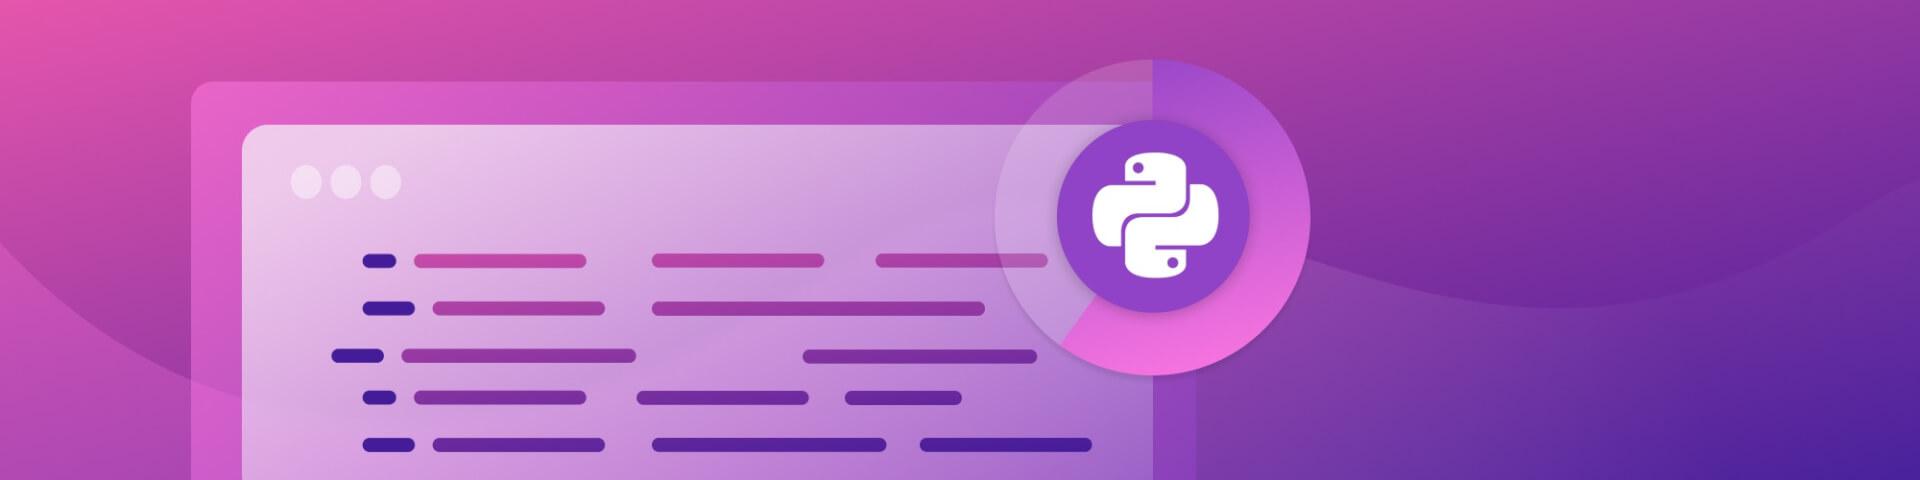 wordpress-sync/blog-hero-python-code-purple